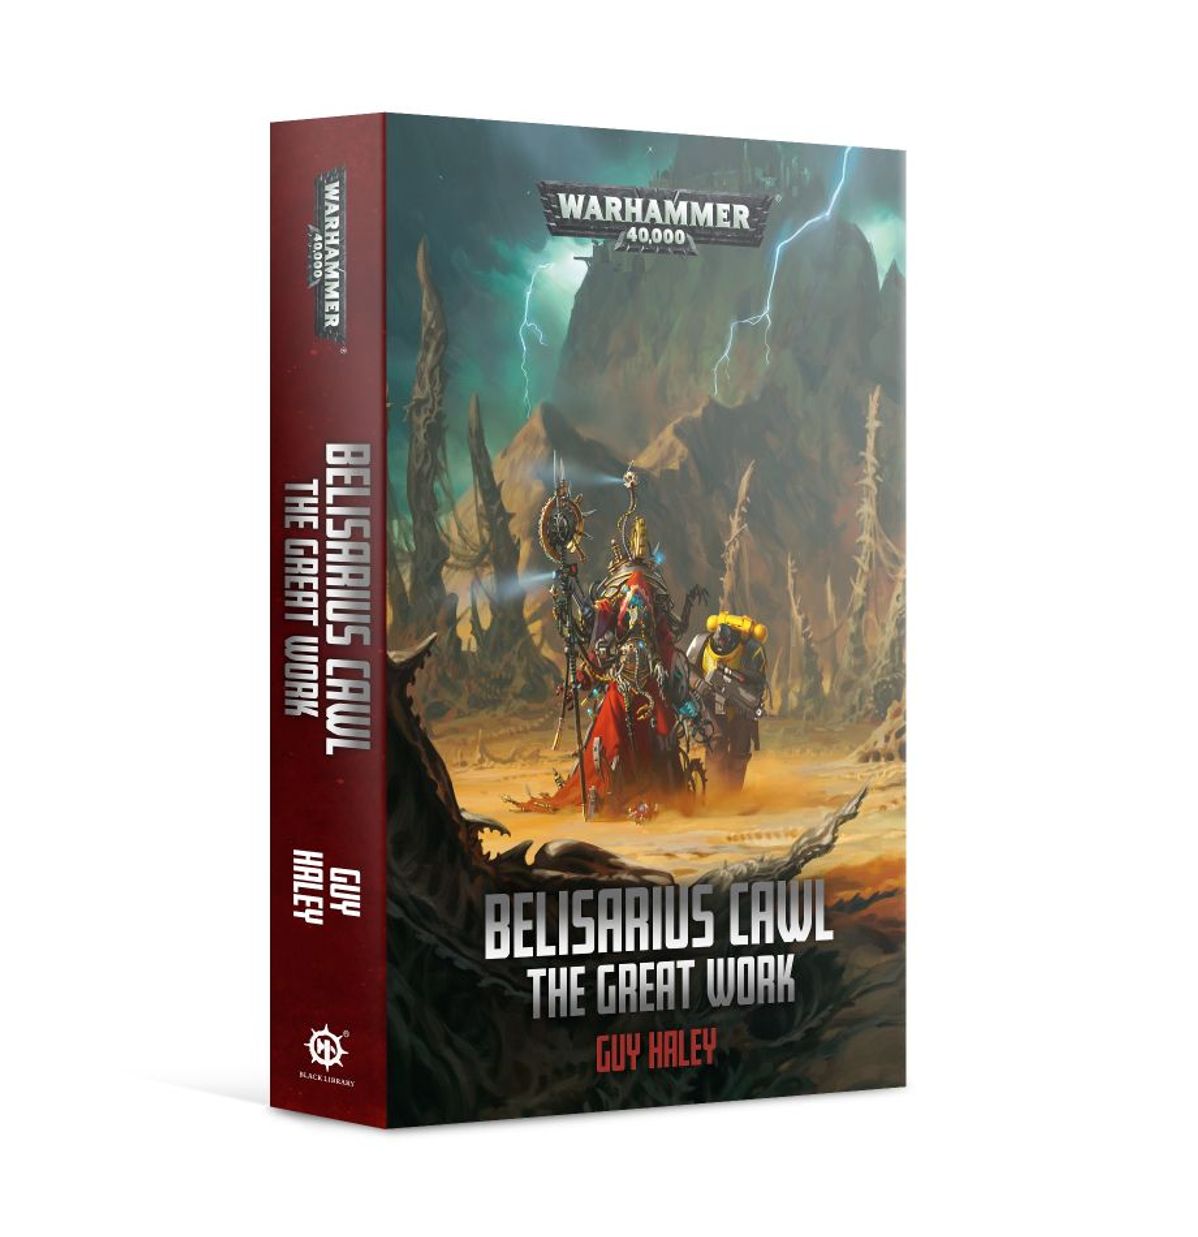 The Great Work - Belisarius Cawl - Warhammer 40k (Paperback)